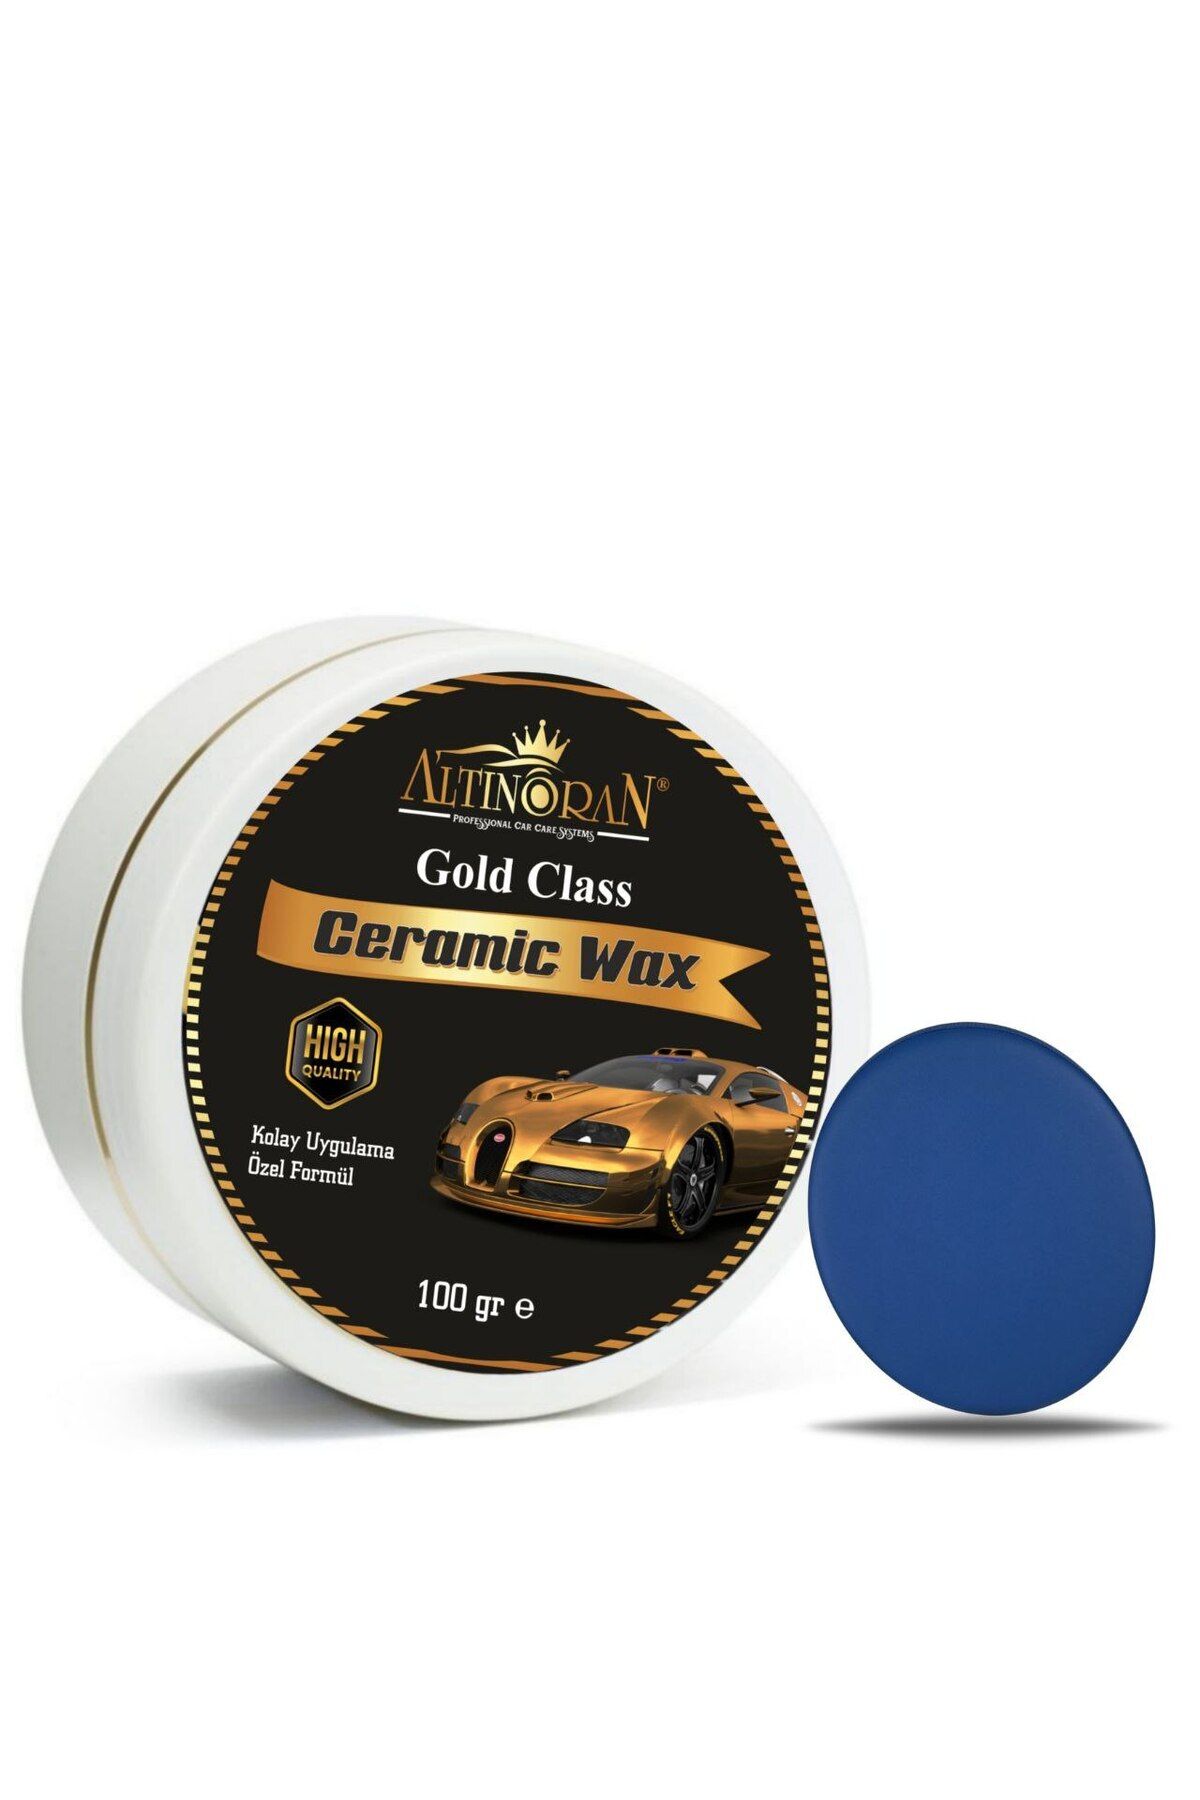 Altınoran Altın Oran Gold Class Seramik Wax Krem Cila Boya Koruma 100 gr